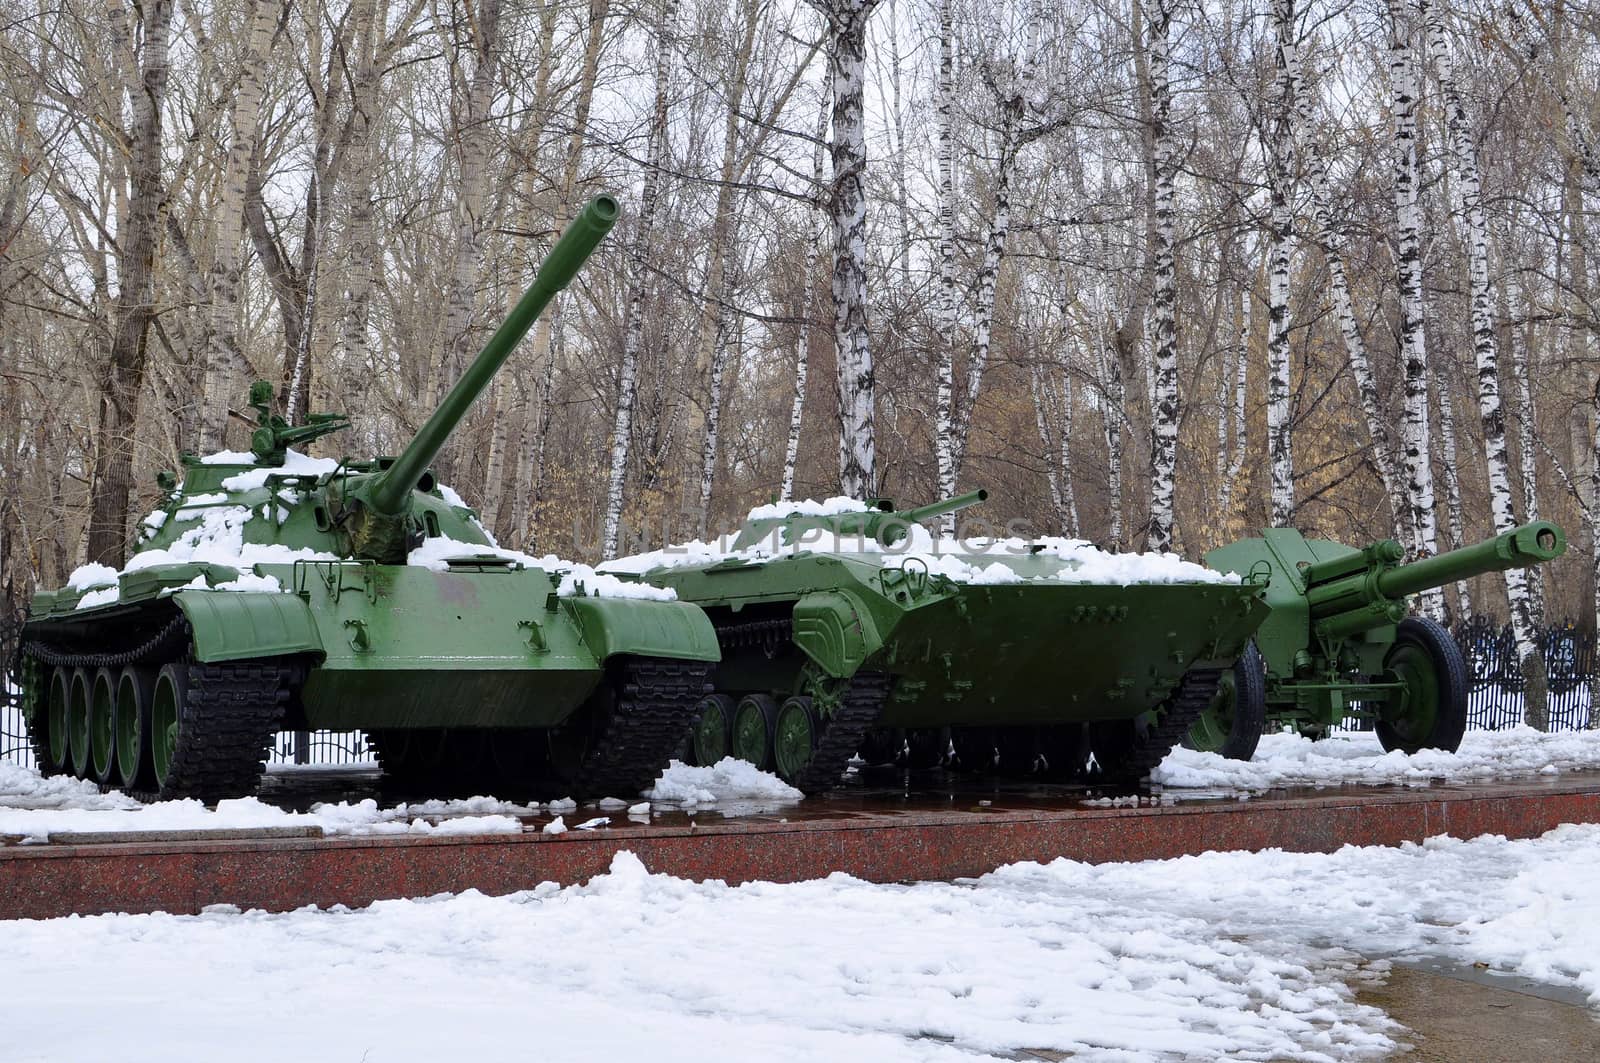 Exhibition of armored equipment. Tyumen